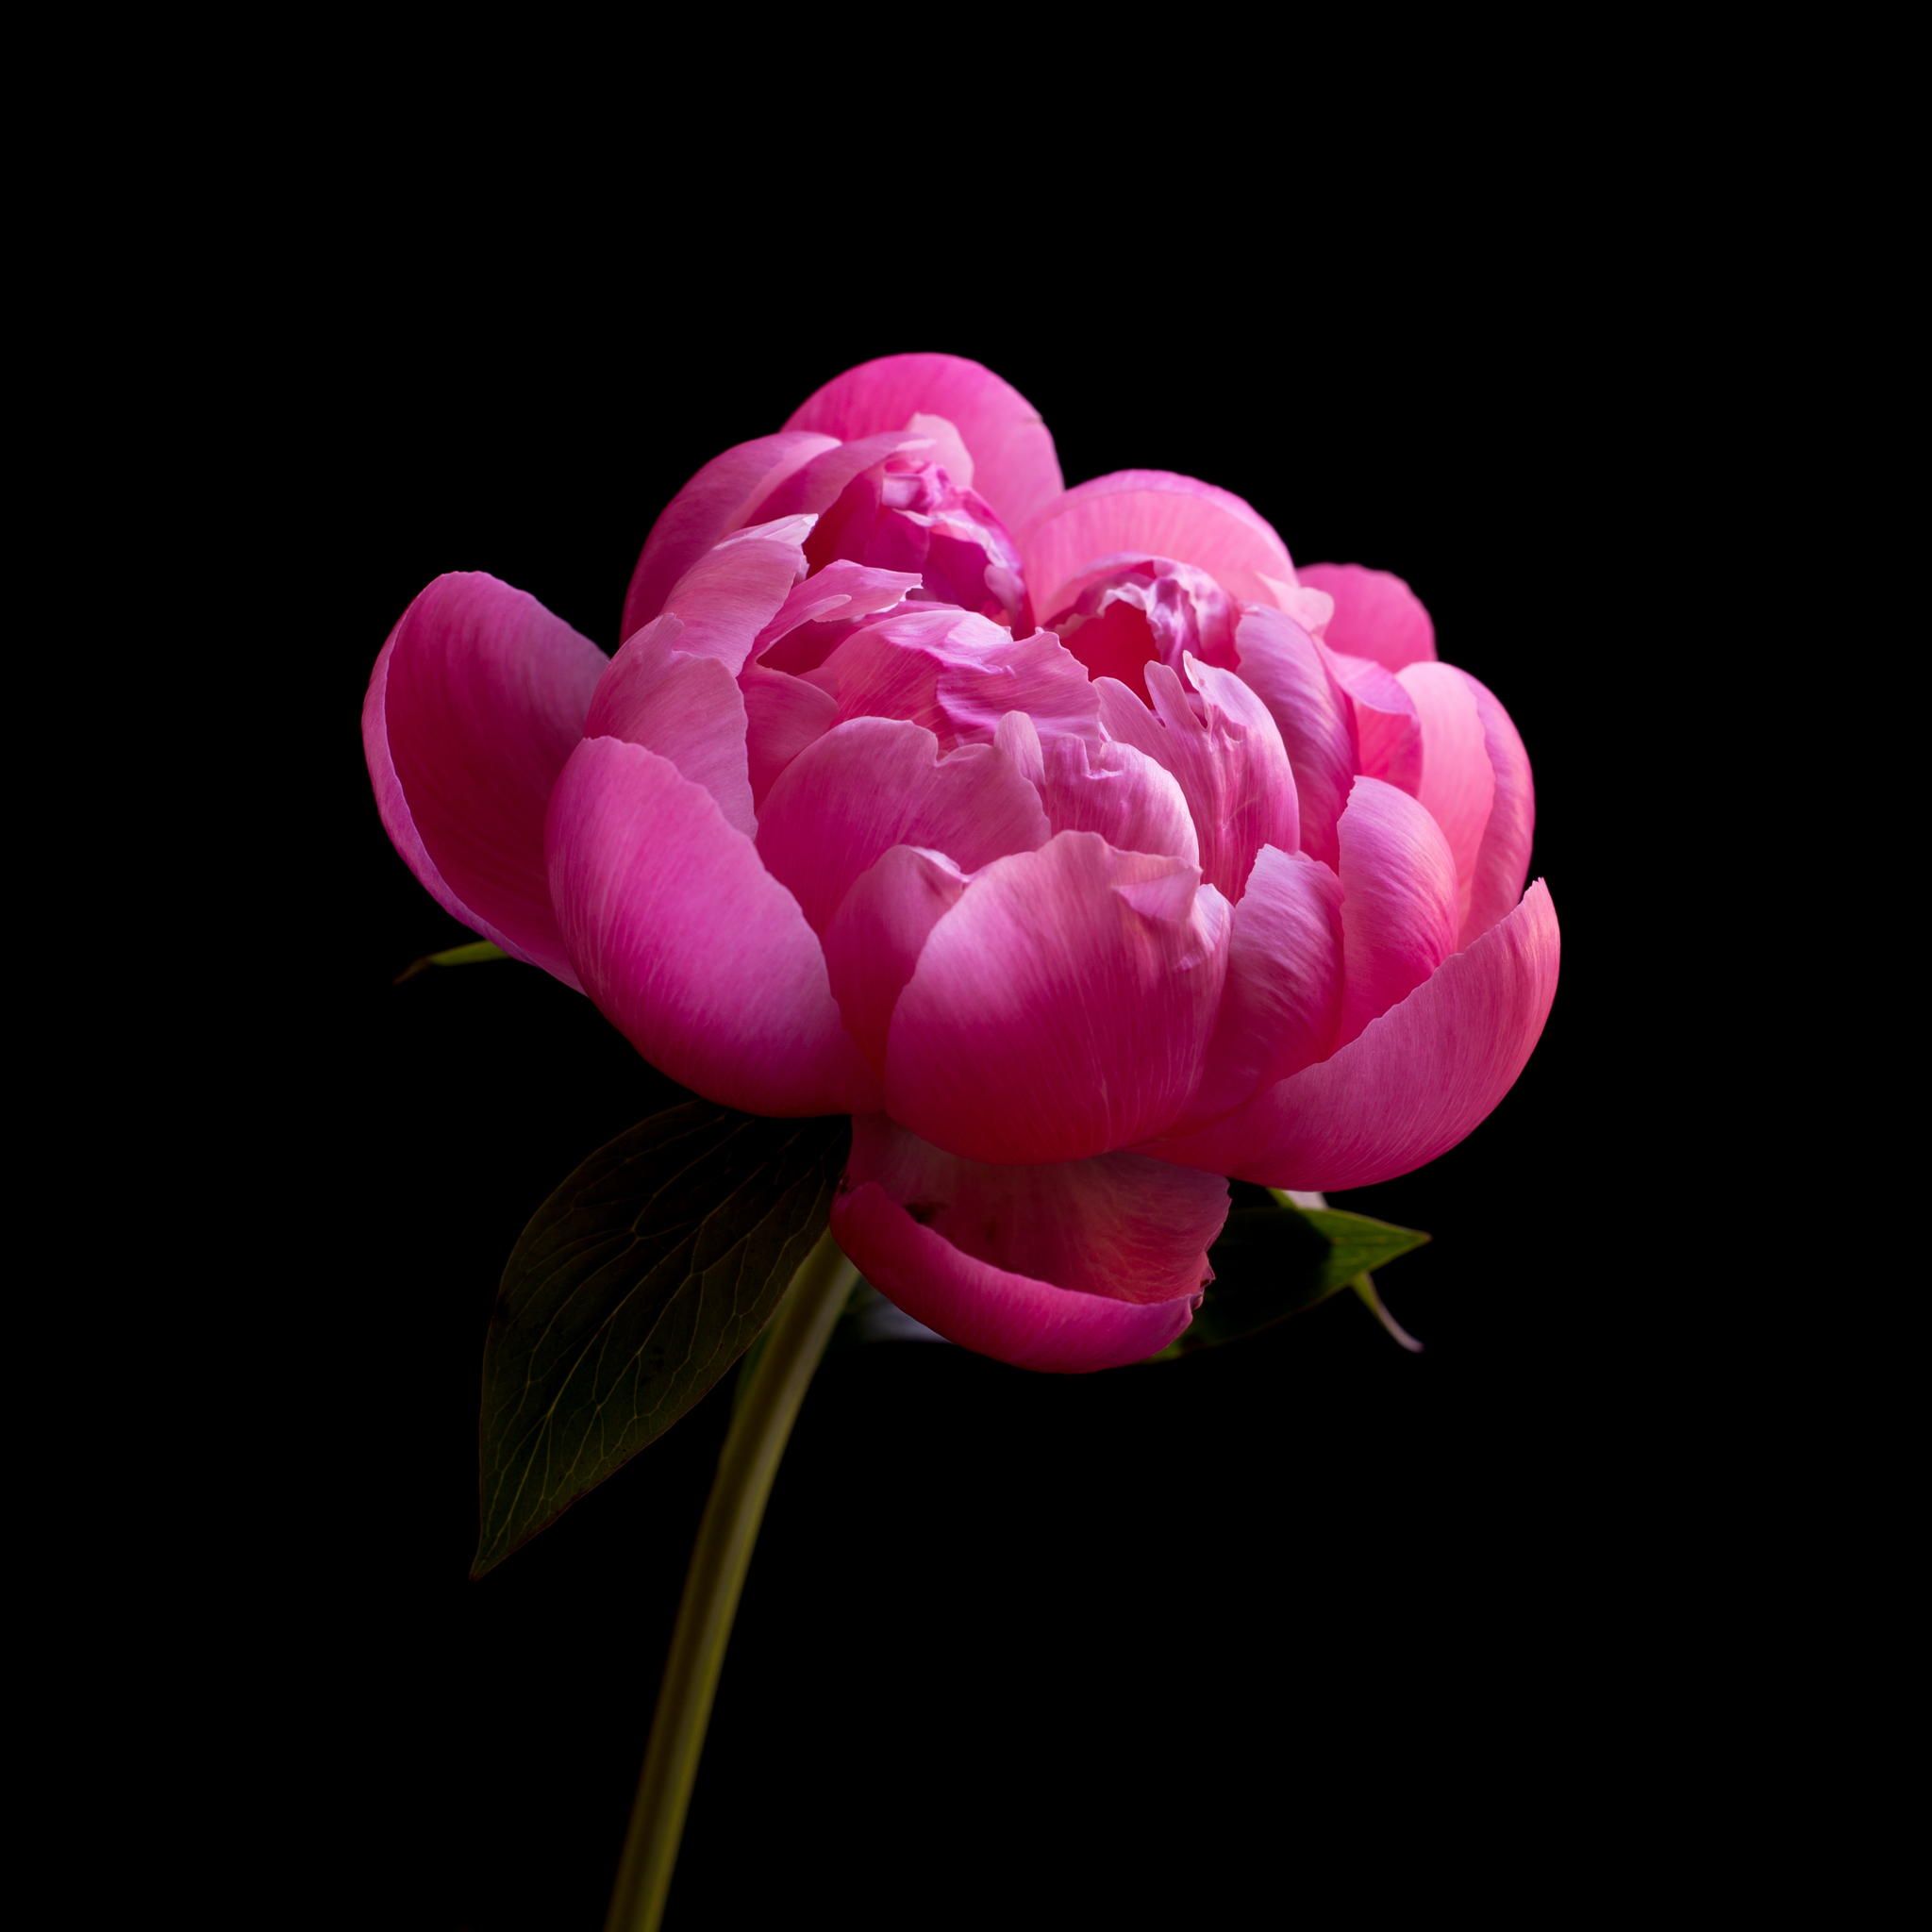 Low key Pink Peony macro by Greg Kirkpatrick on 500px | suman ...